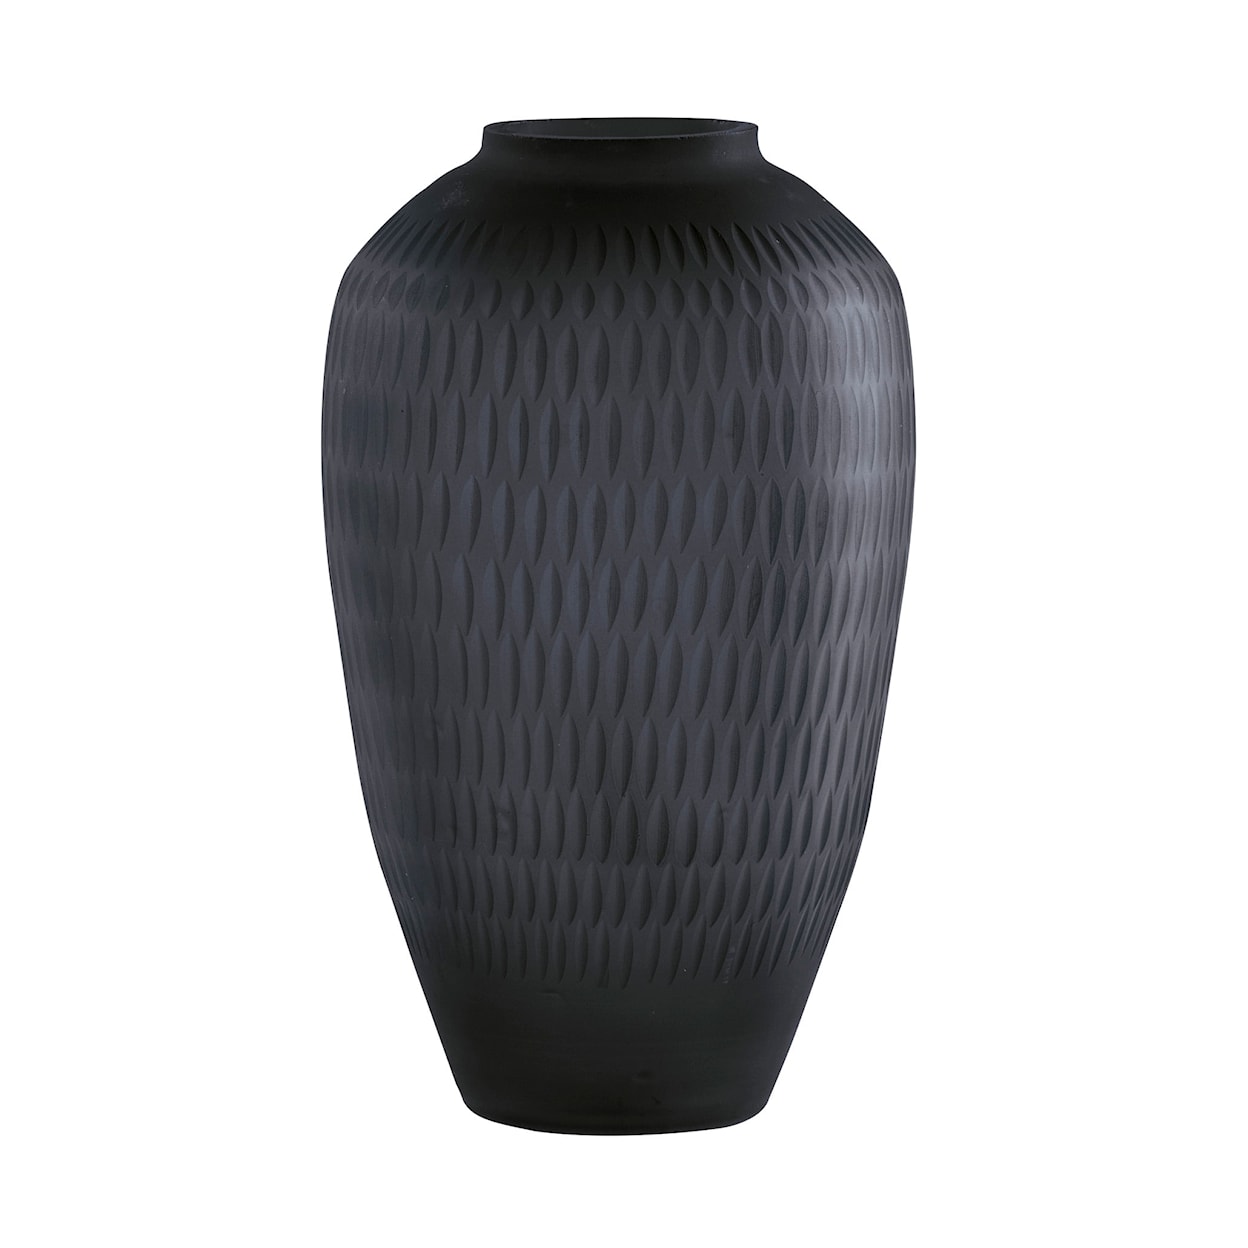 Benchcraft Accents Etney Vase